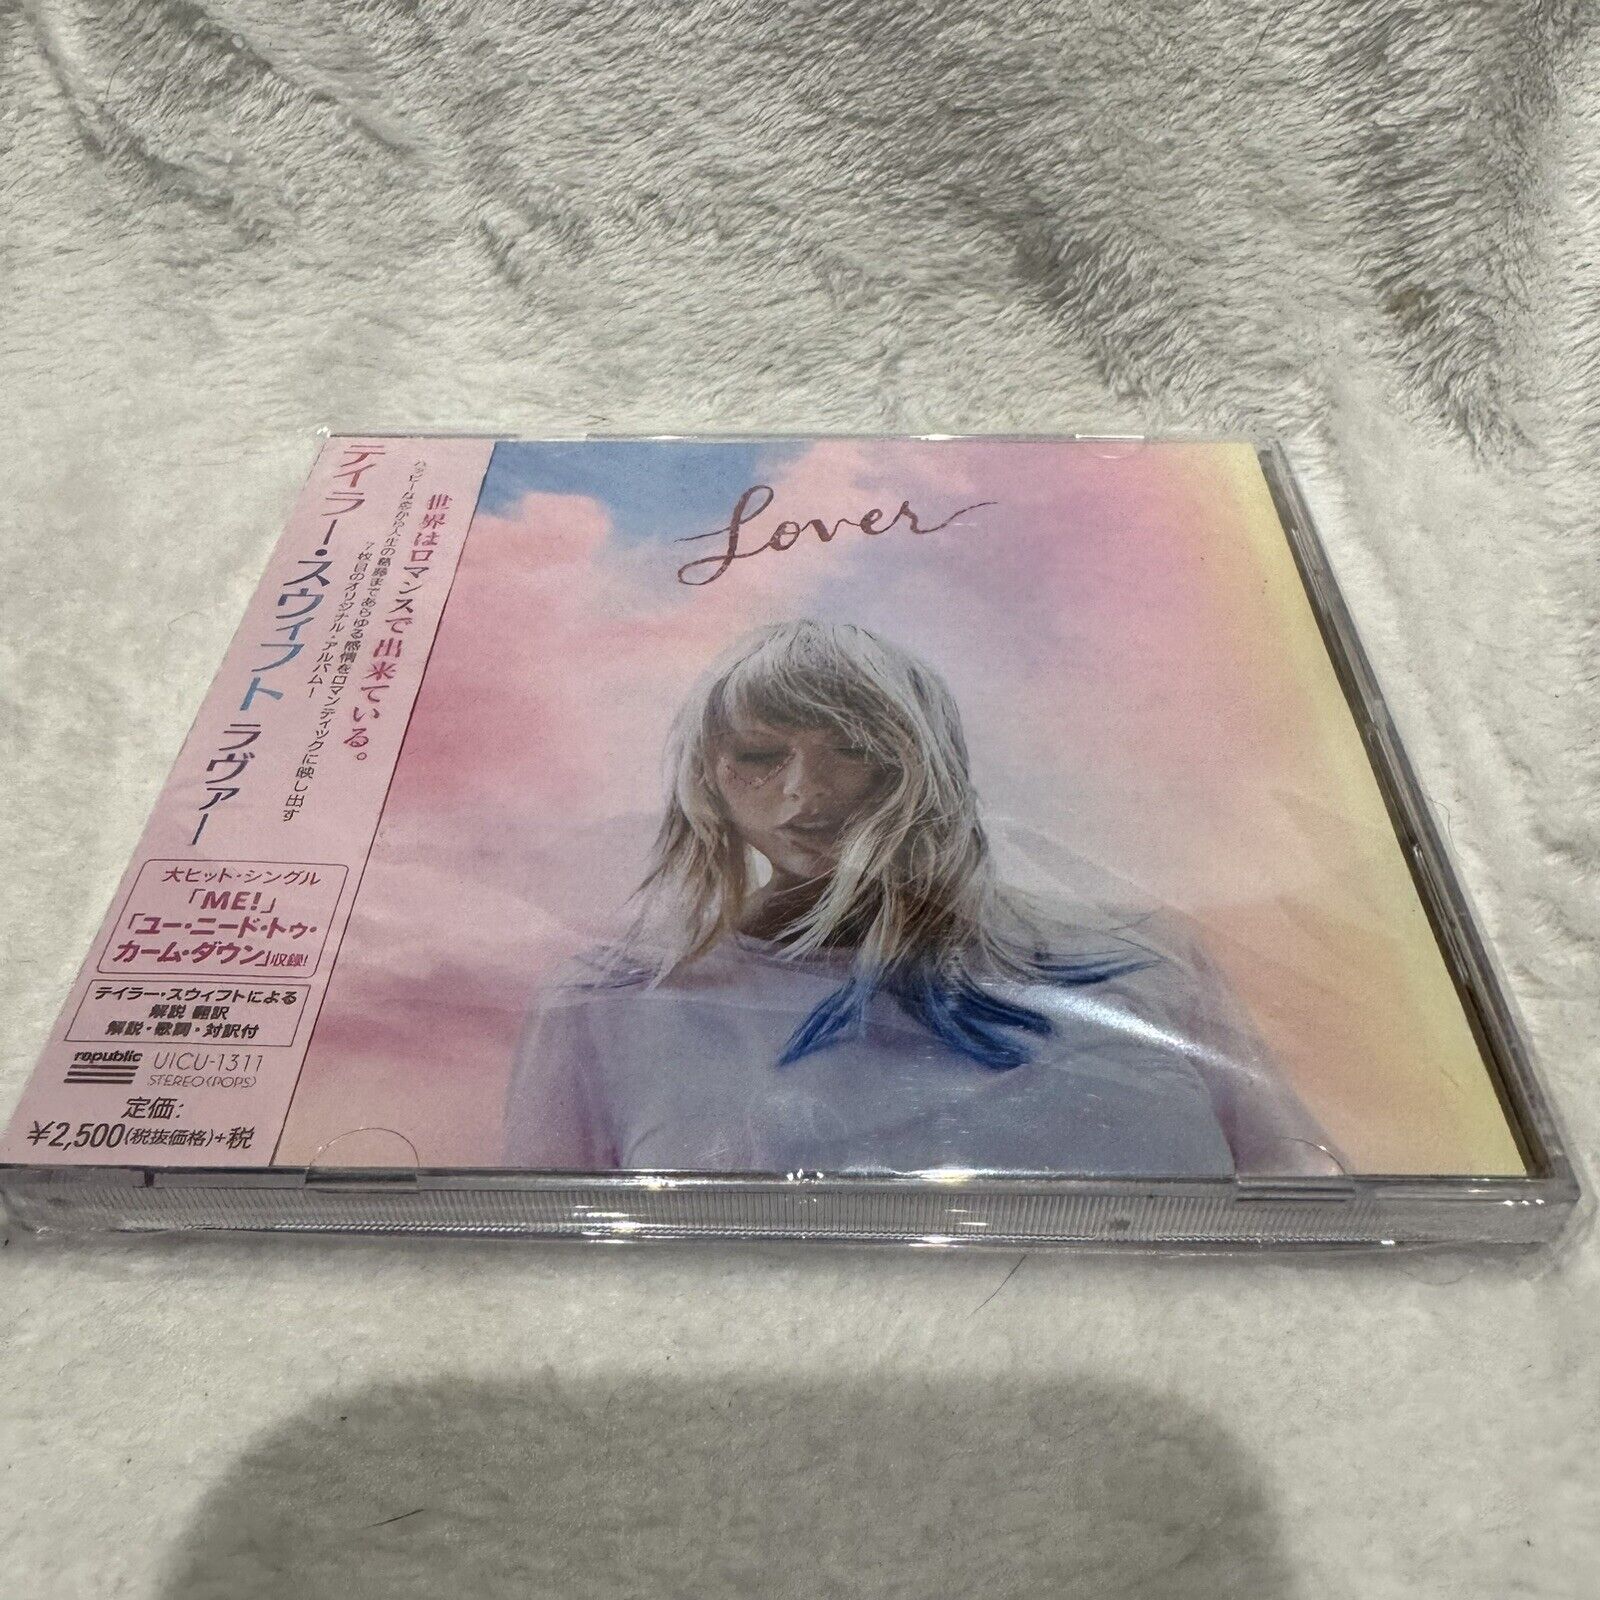 VGC CD Album Japan Japanese With OBI Taylor Swift Lover